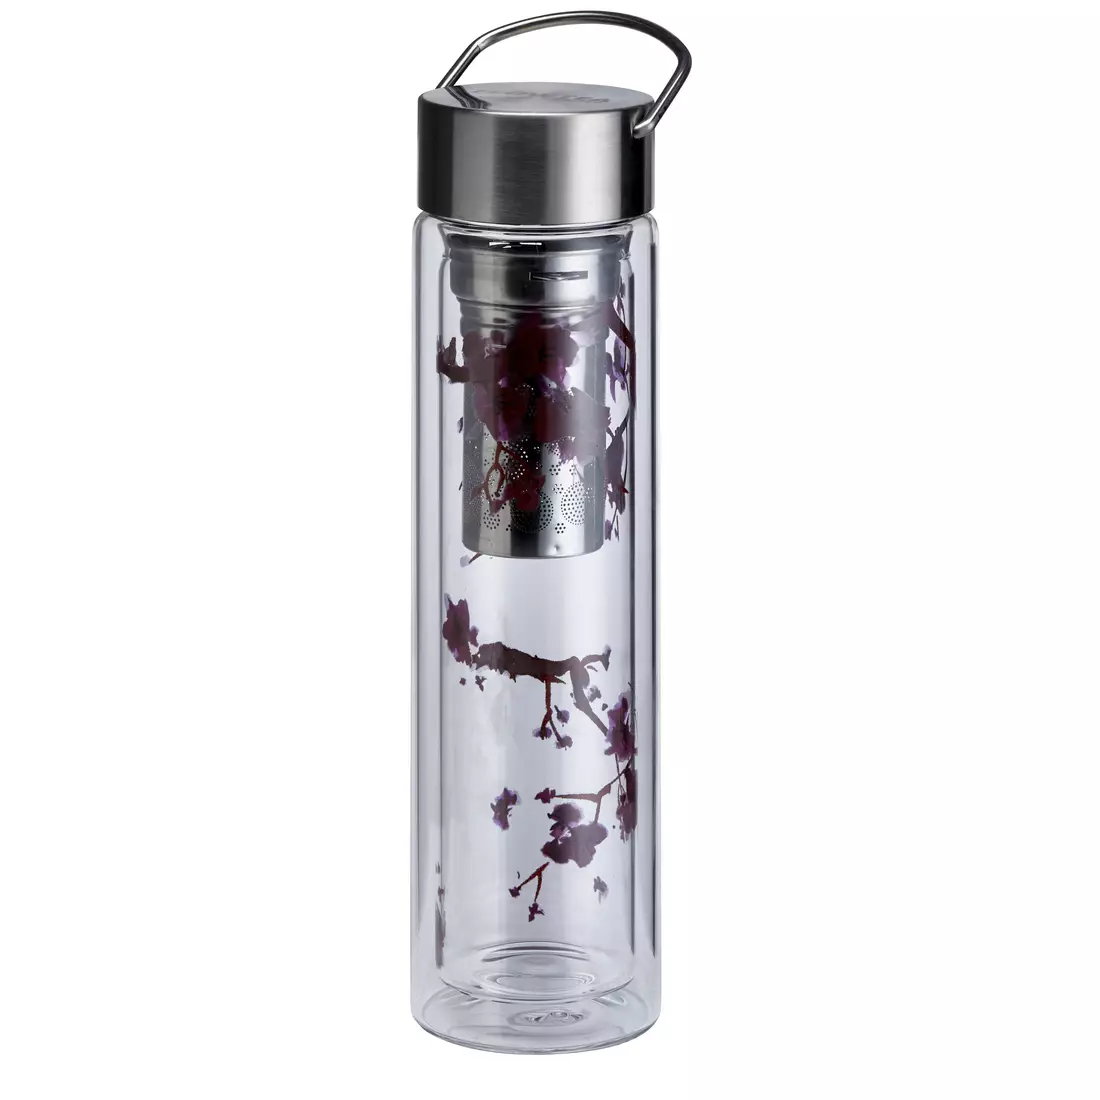 EIGENART FLOWTEA thermal bottle with infuser 350-400 ml, cherry blossom